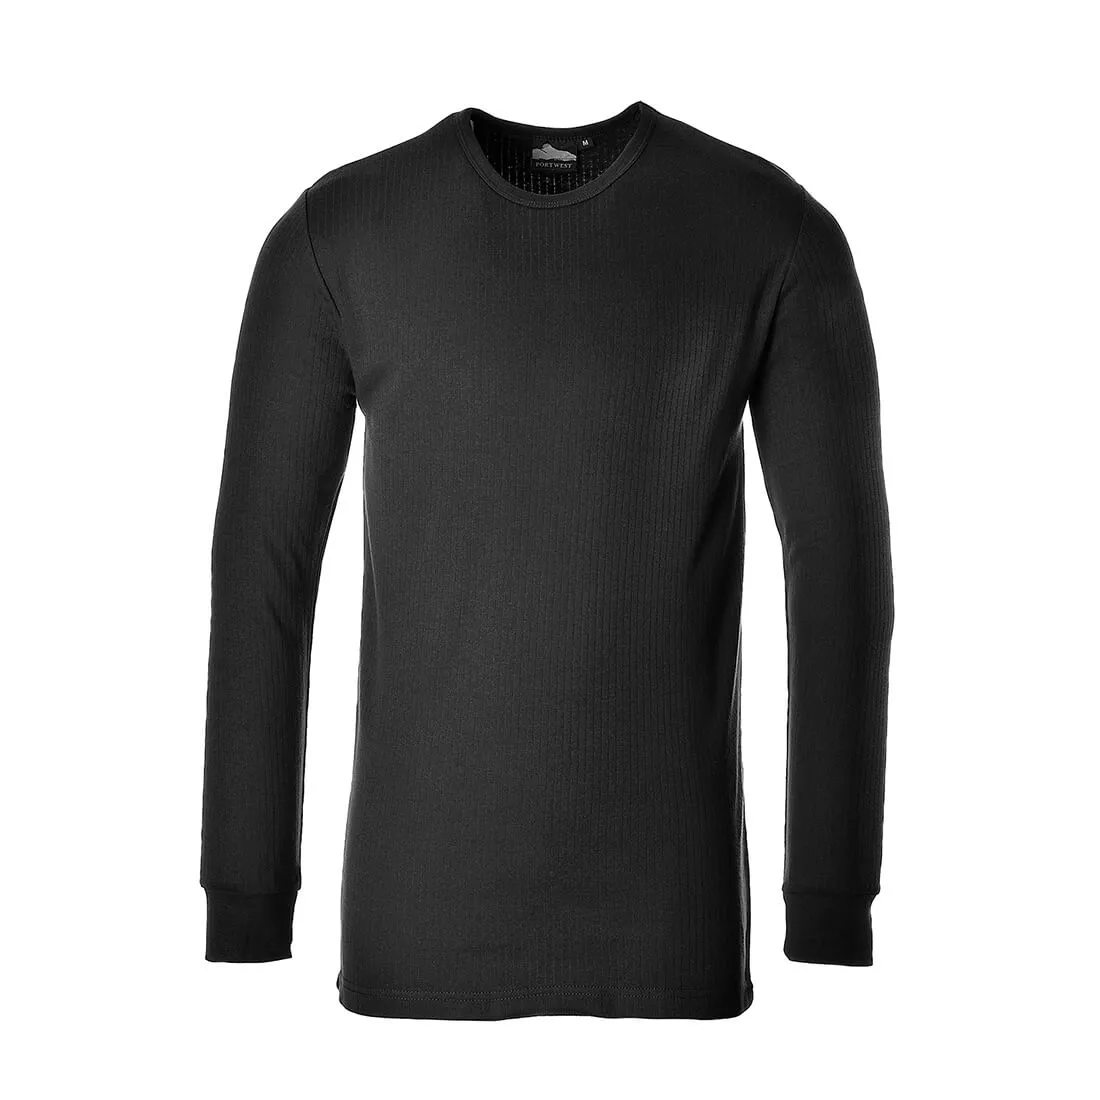 Portwest Thermal Long Sleeve T Shirt - Black, L